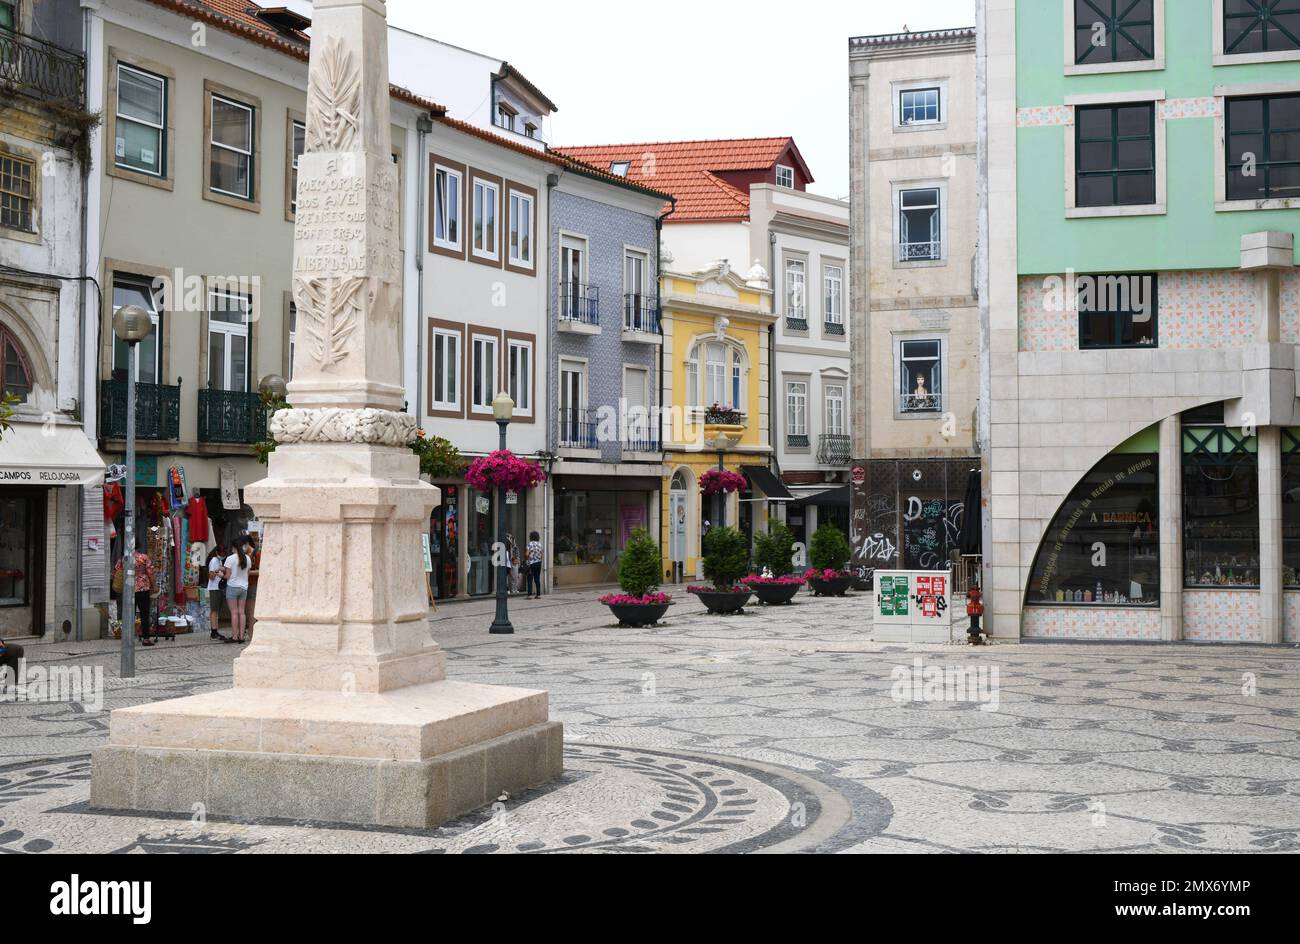 Aveiro, Square and pedestrian street. Portugal. Stock Photo